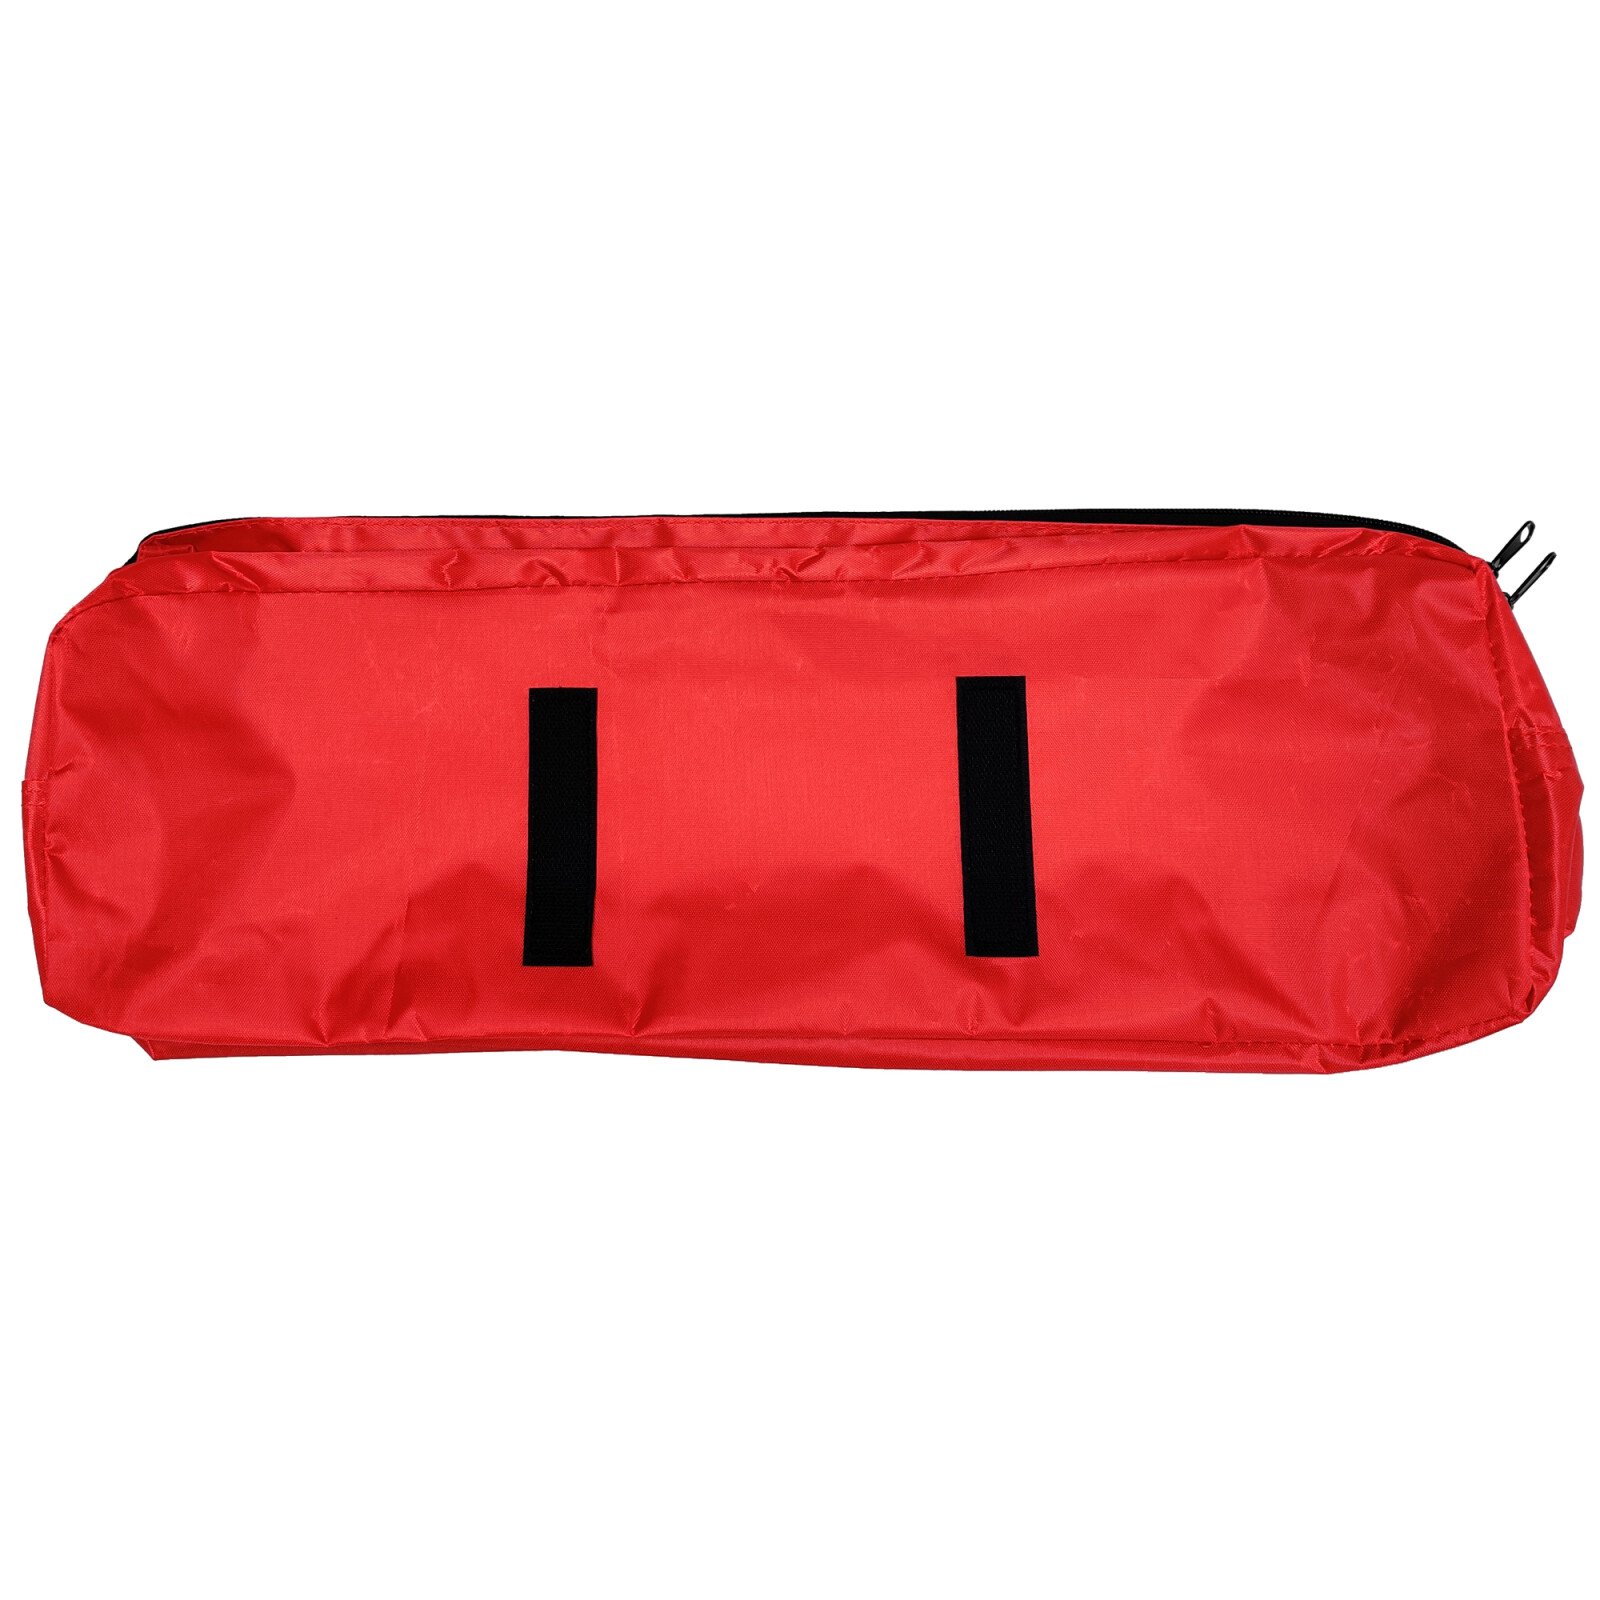 Cridem trunk organizer bag - Red/Black thumb